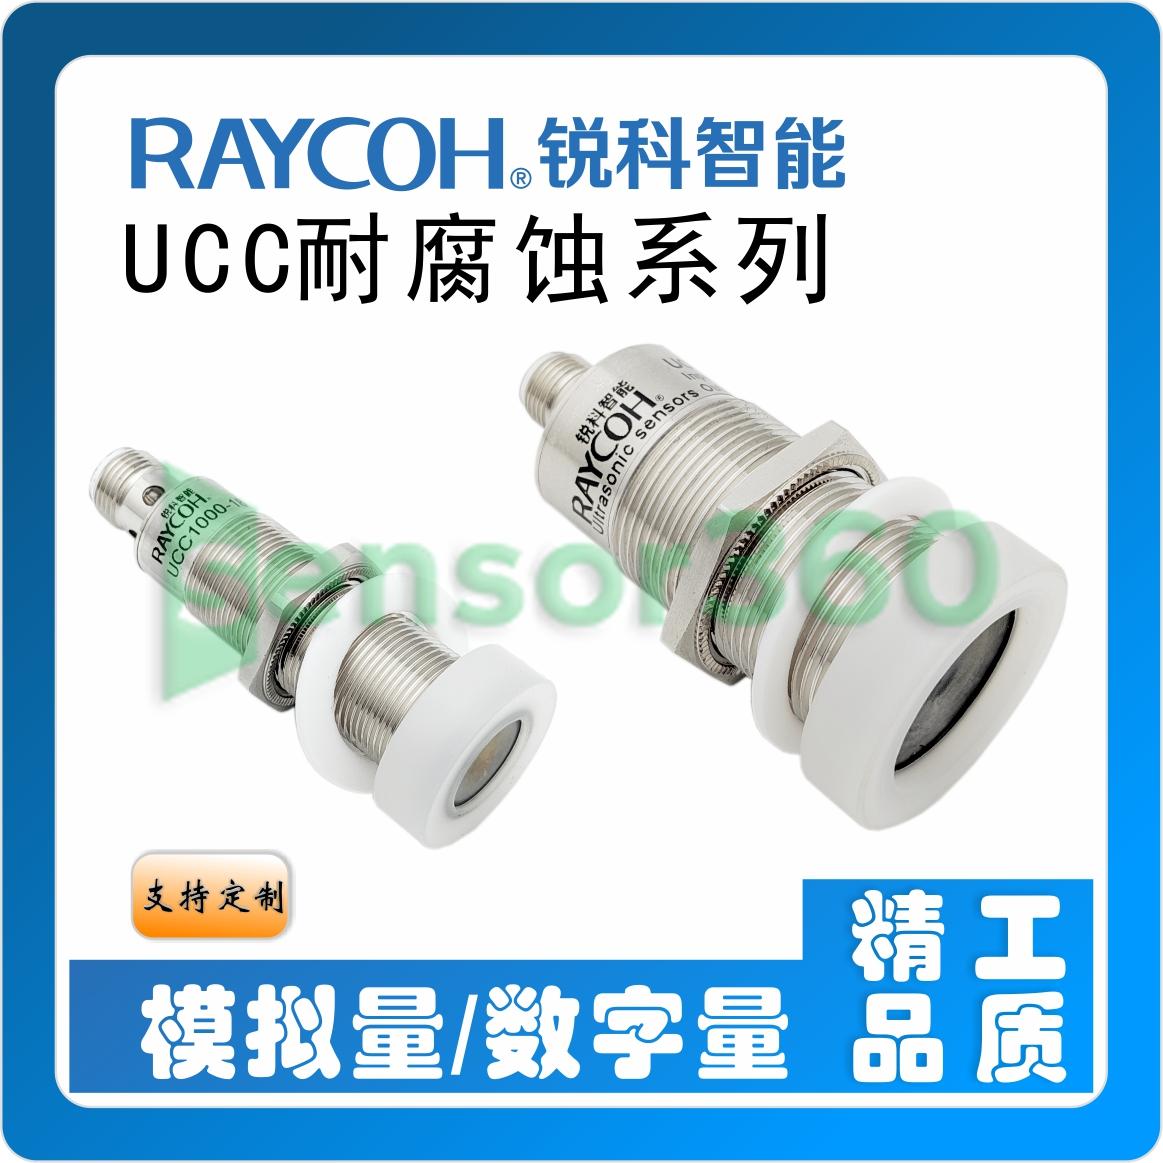 UCC corrosion-resistant series ultrasonic sensors